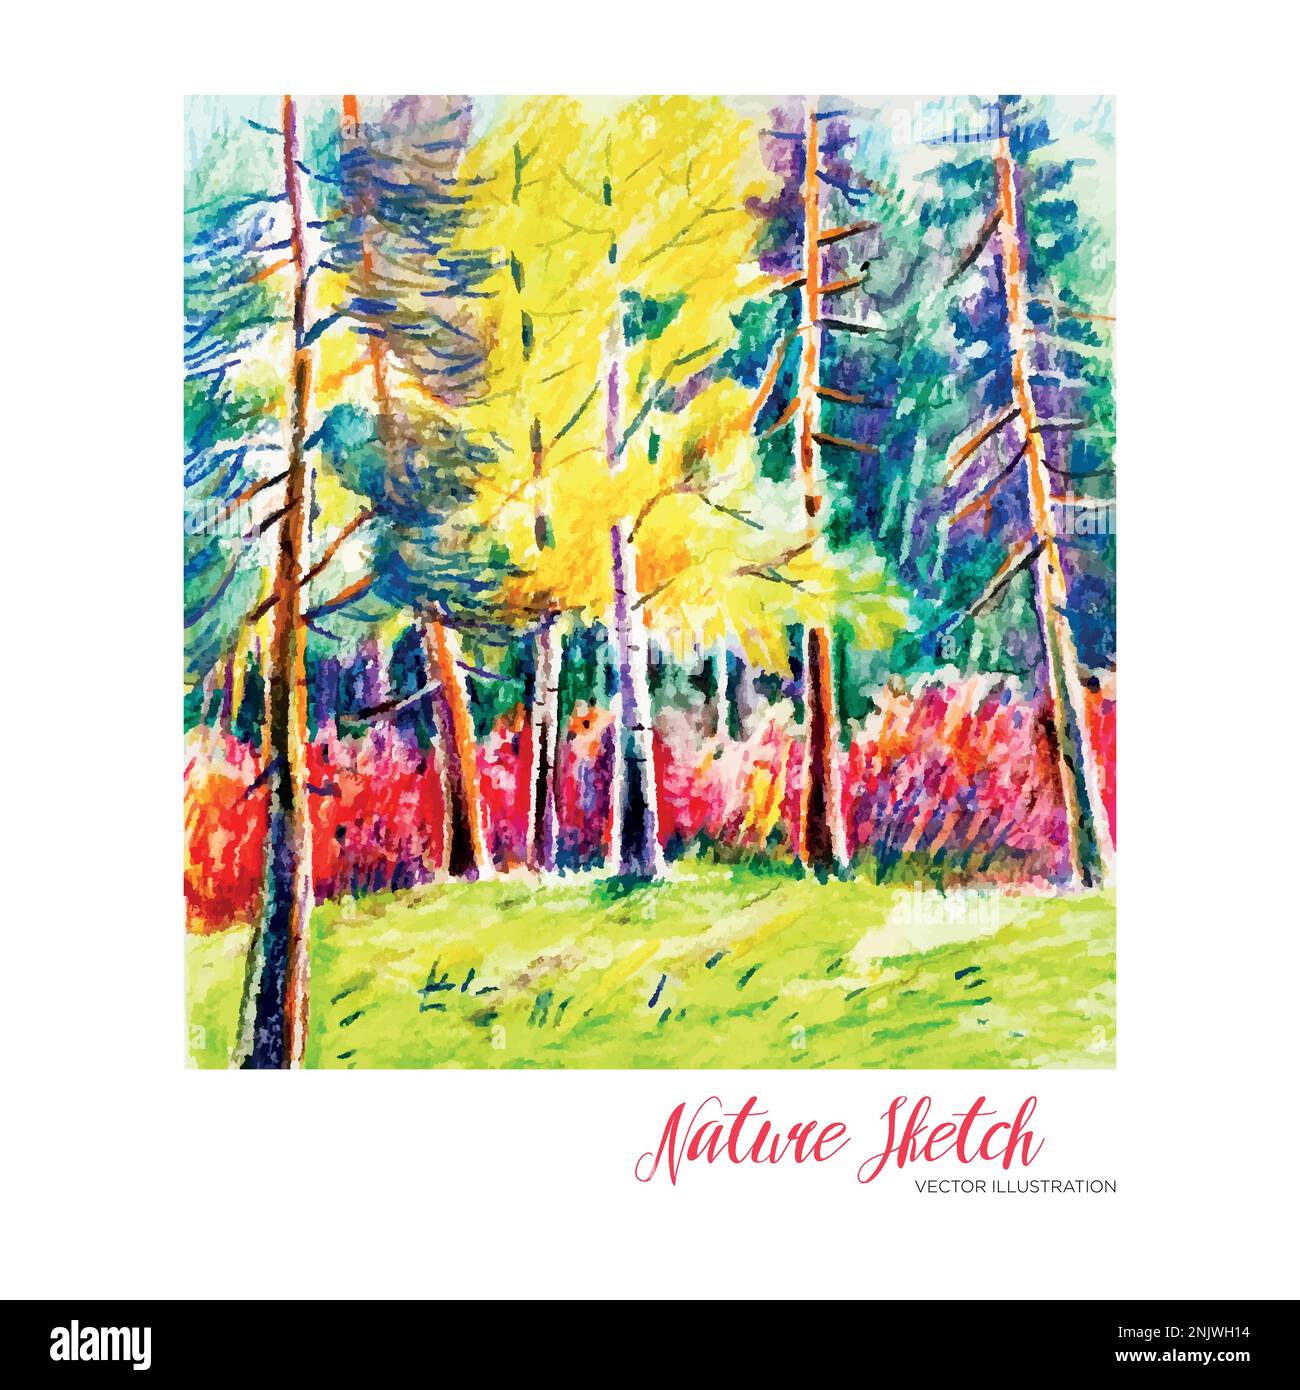 https://c8.alamy.com/comp/2NJWH14/sketch-graphic-landscape-colored-pencils-vector-illustration-summer-nature-illustration-art-background-autumn-2NJWH14.jpg